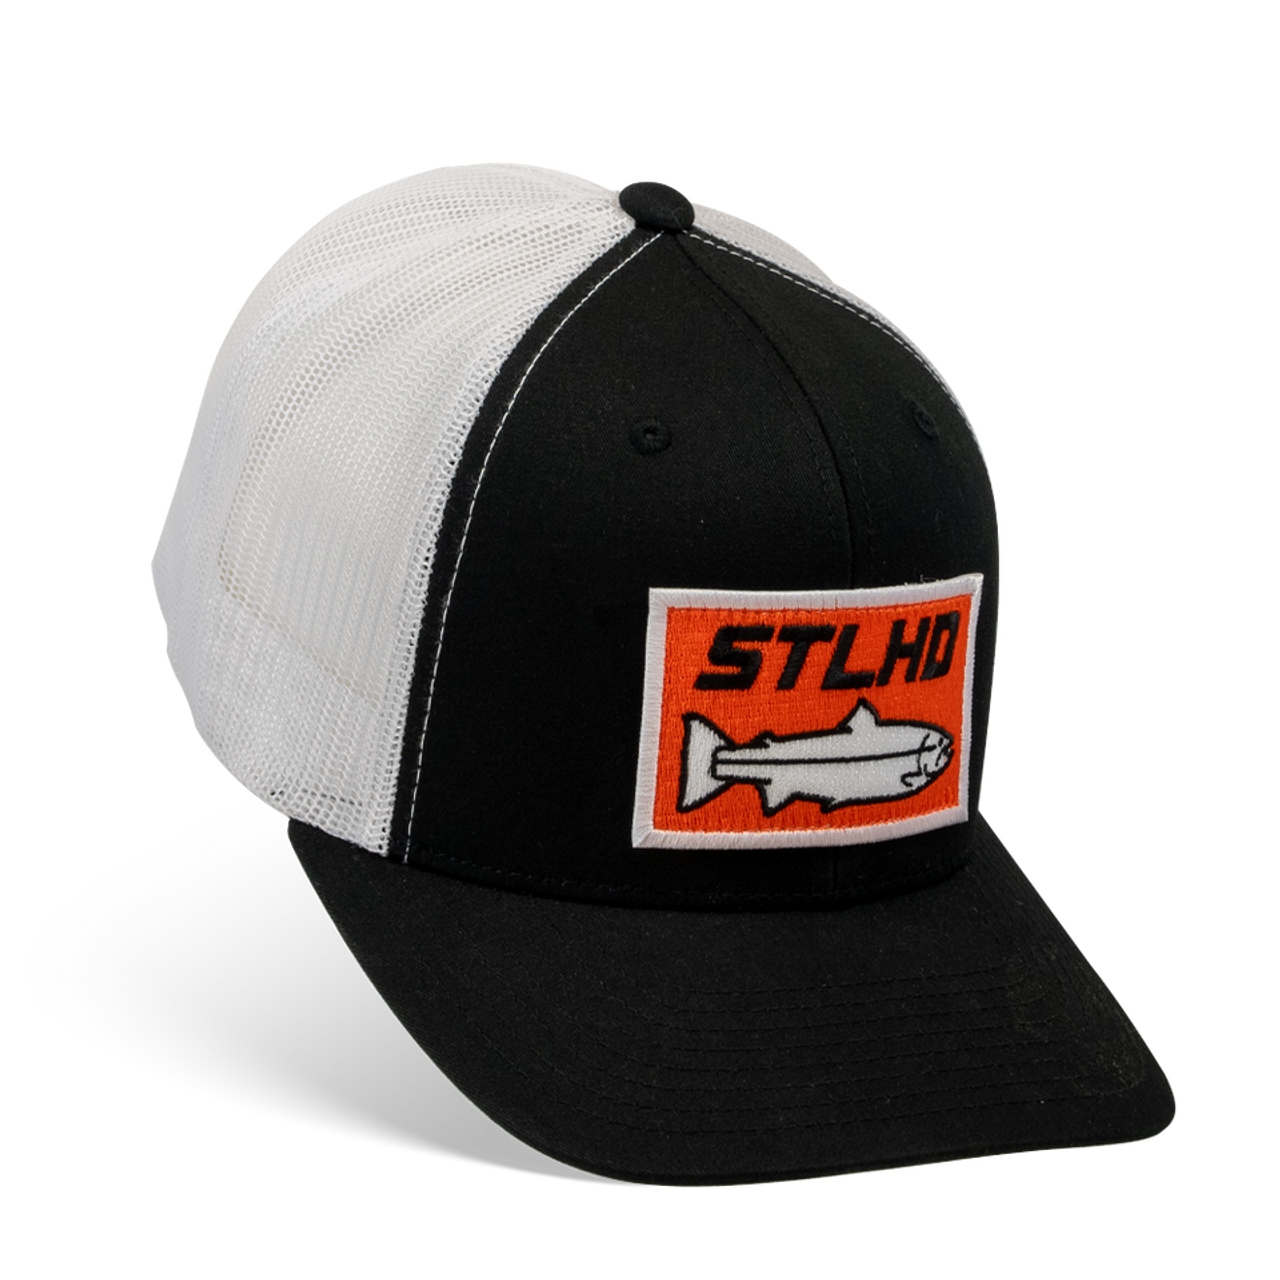 STLHD Standard White & Black Snapback Hat